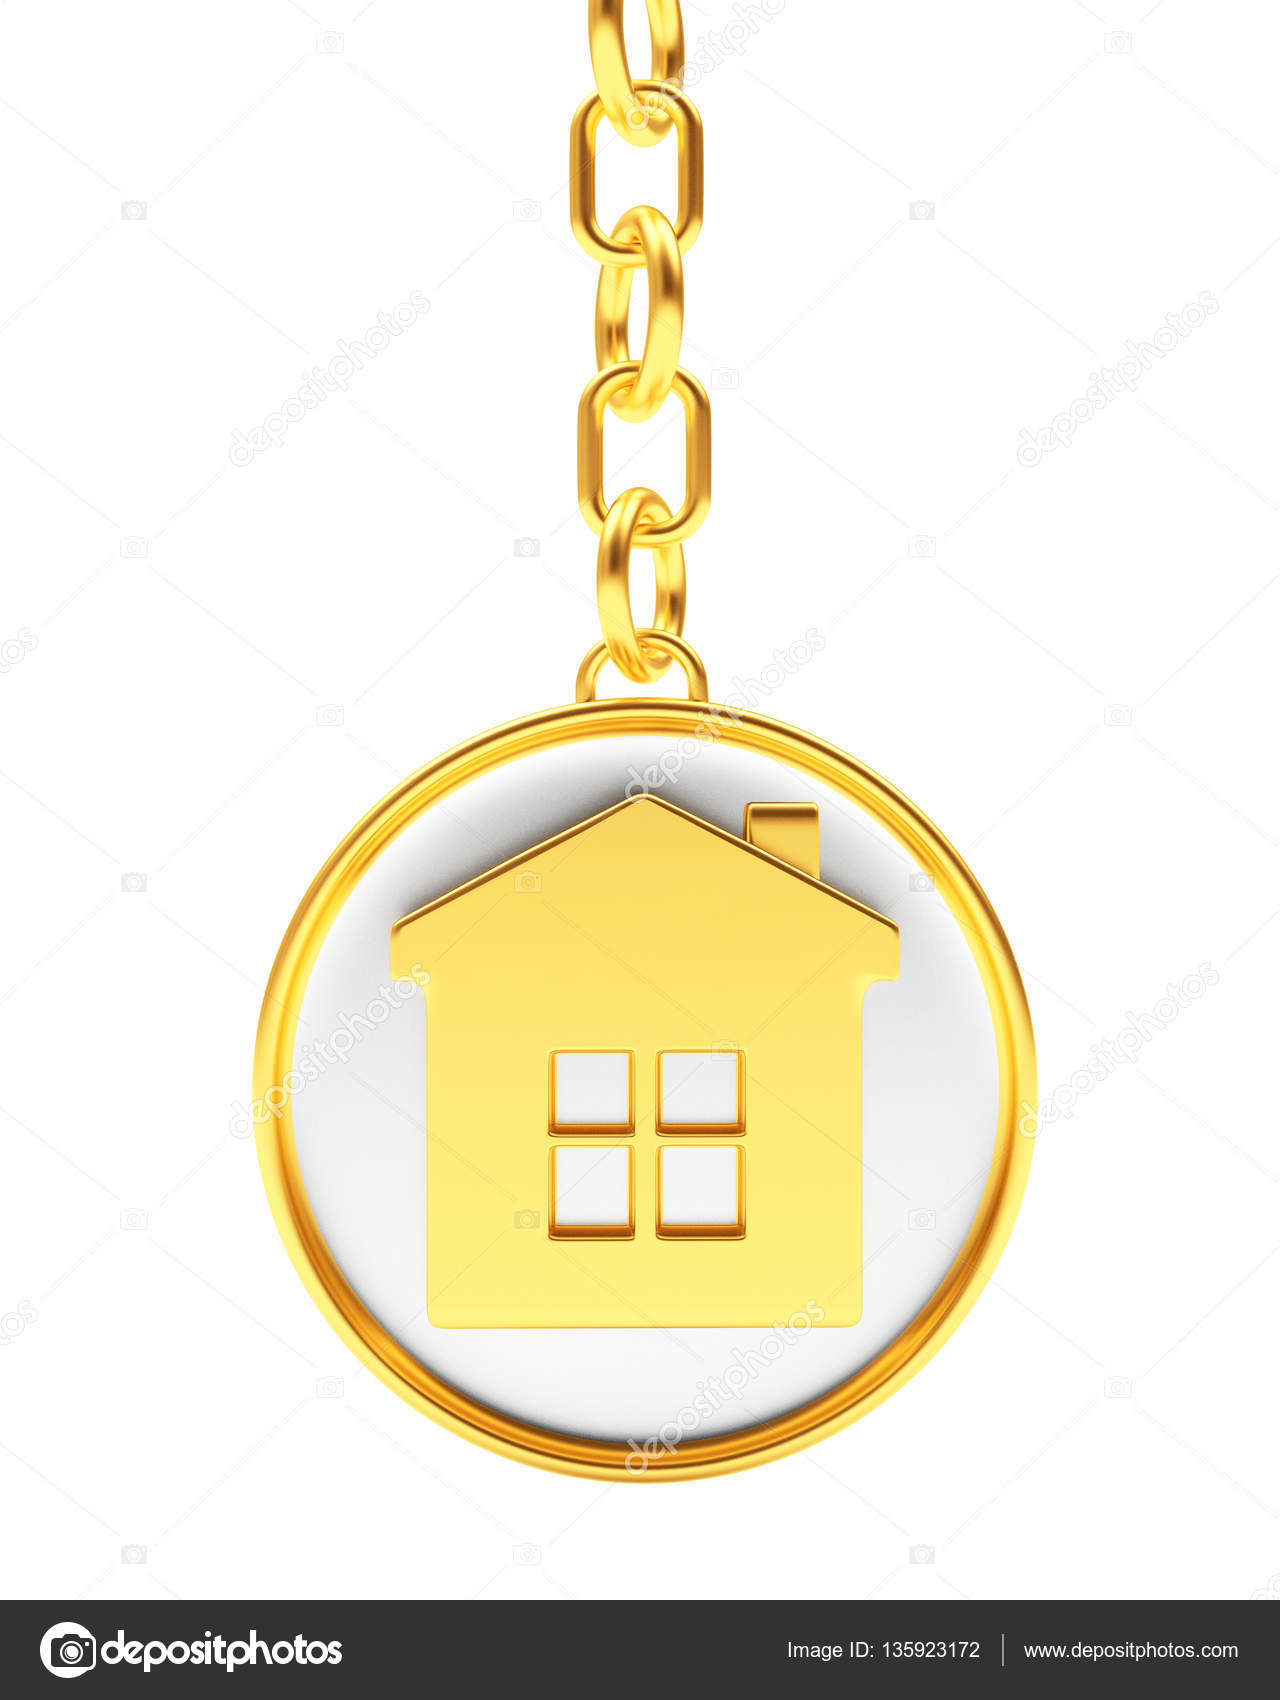 Round golden key chain with house icon — Stock Photo © rashevskiy